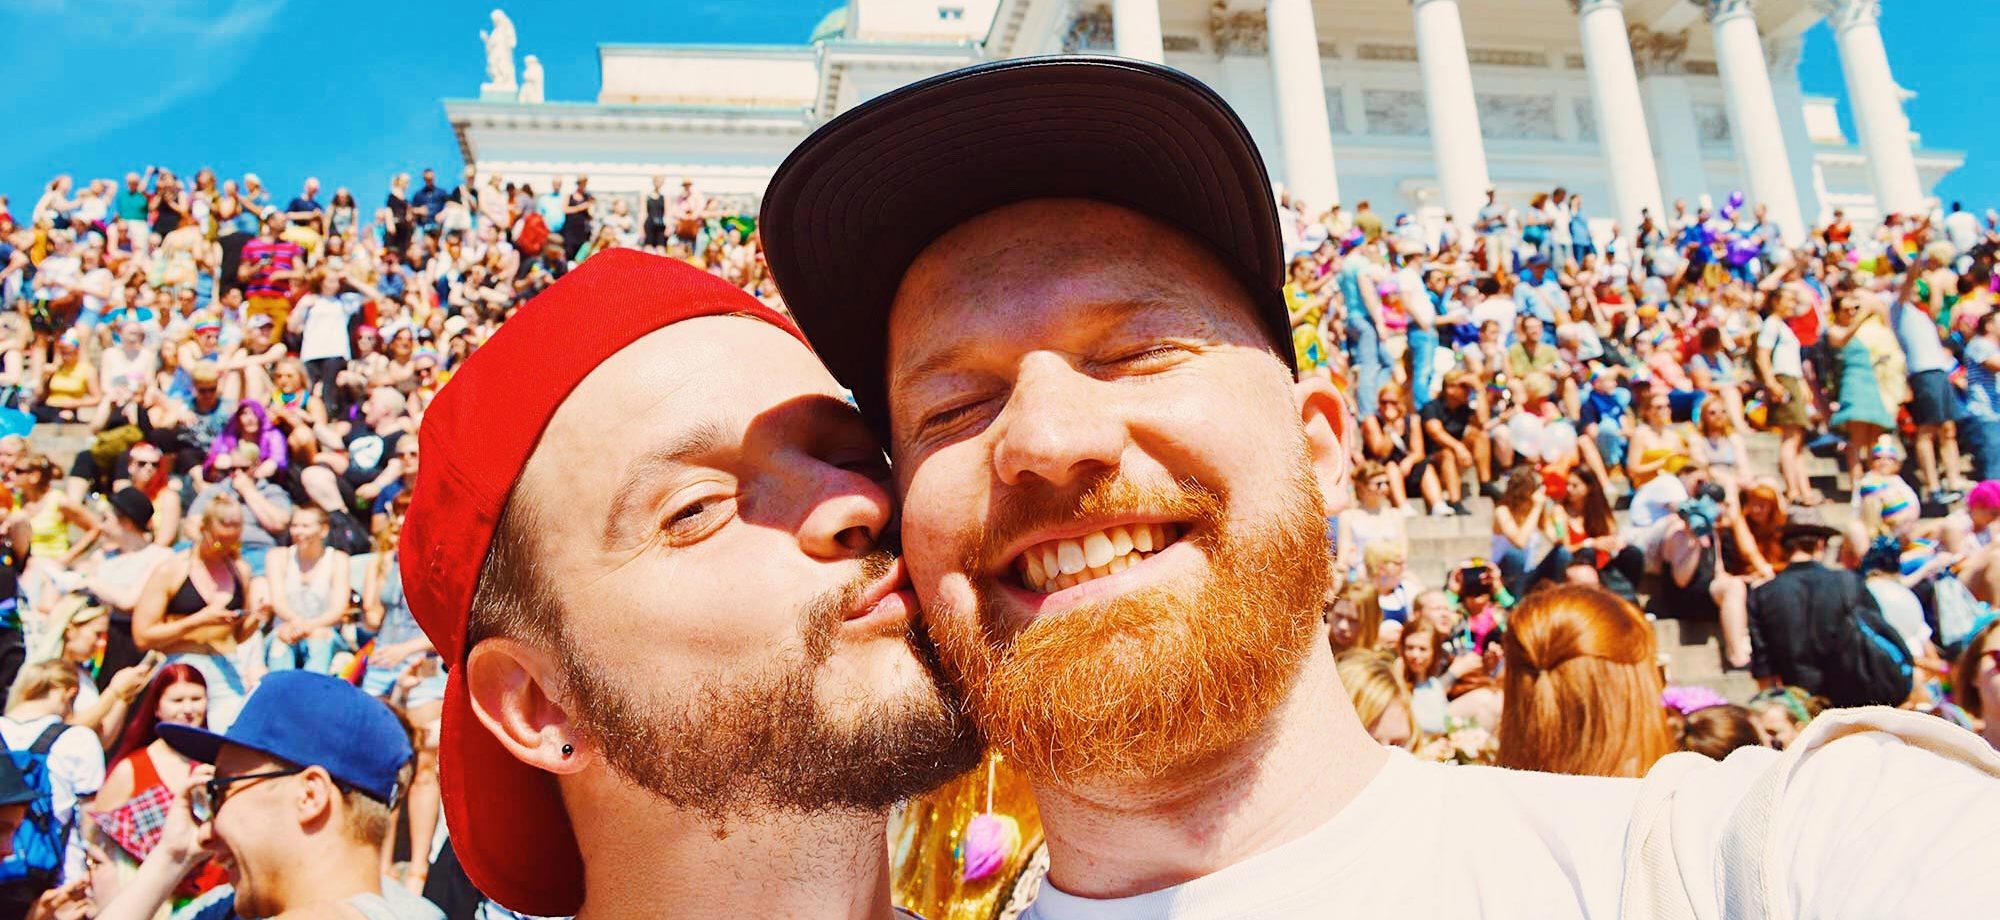 Couple of Men Gay Pride Trips - Love Kiss | Gay Pride Helsinki LGBTQ Festival Parade 2016 © CoupleofMen.com